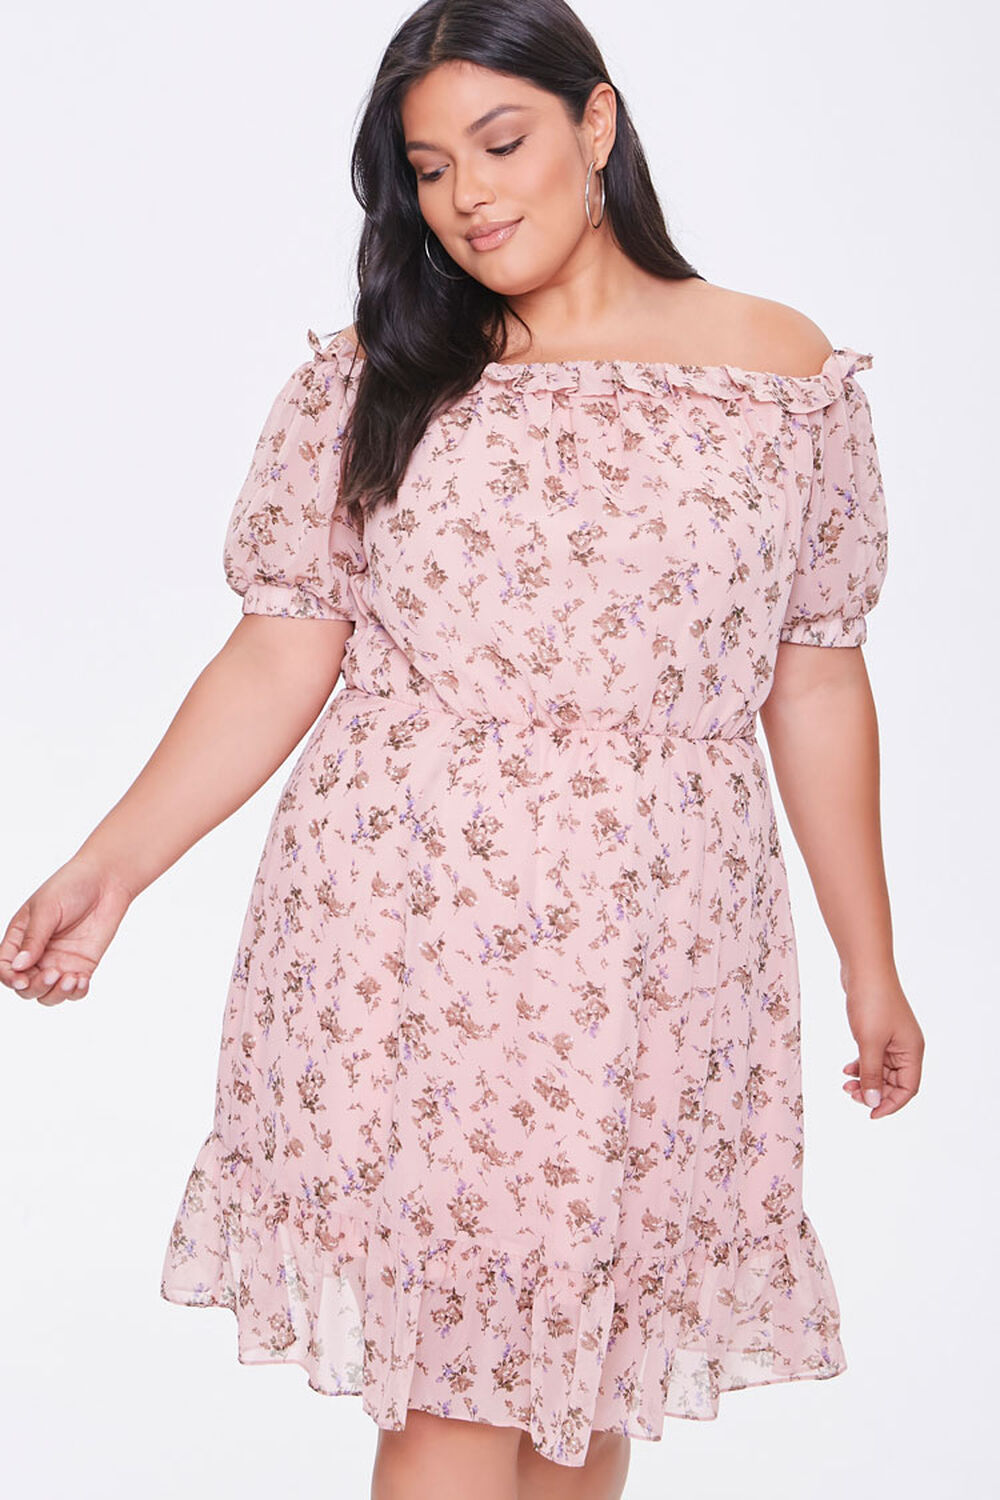 PINK/MULTI Plus Size Off-the-Shoulder Floral Print Dress, image 1